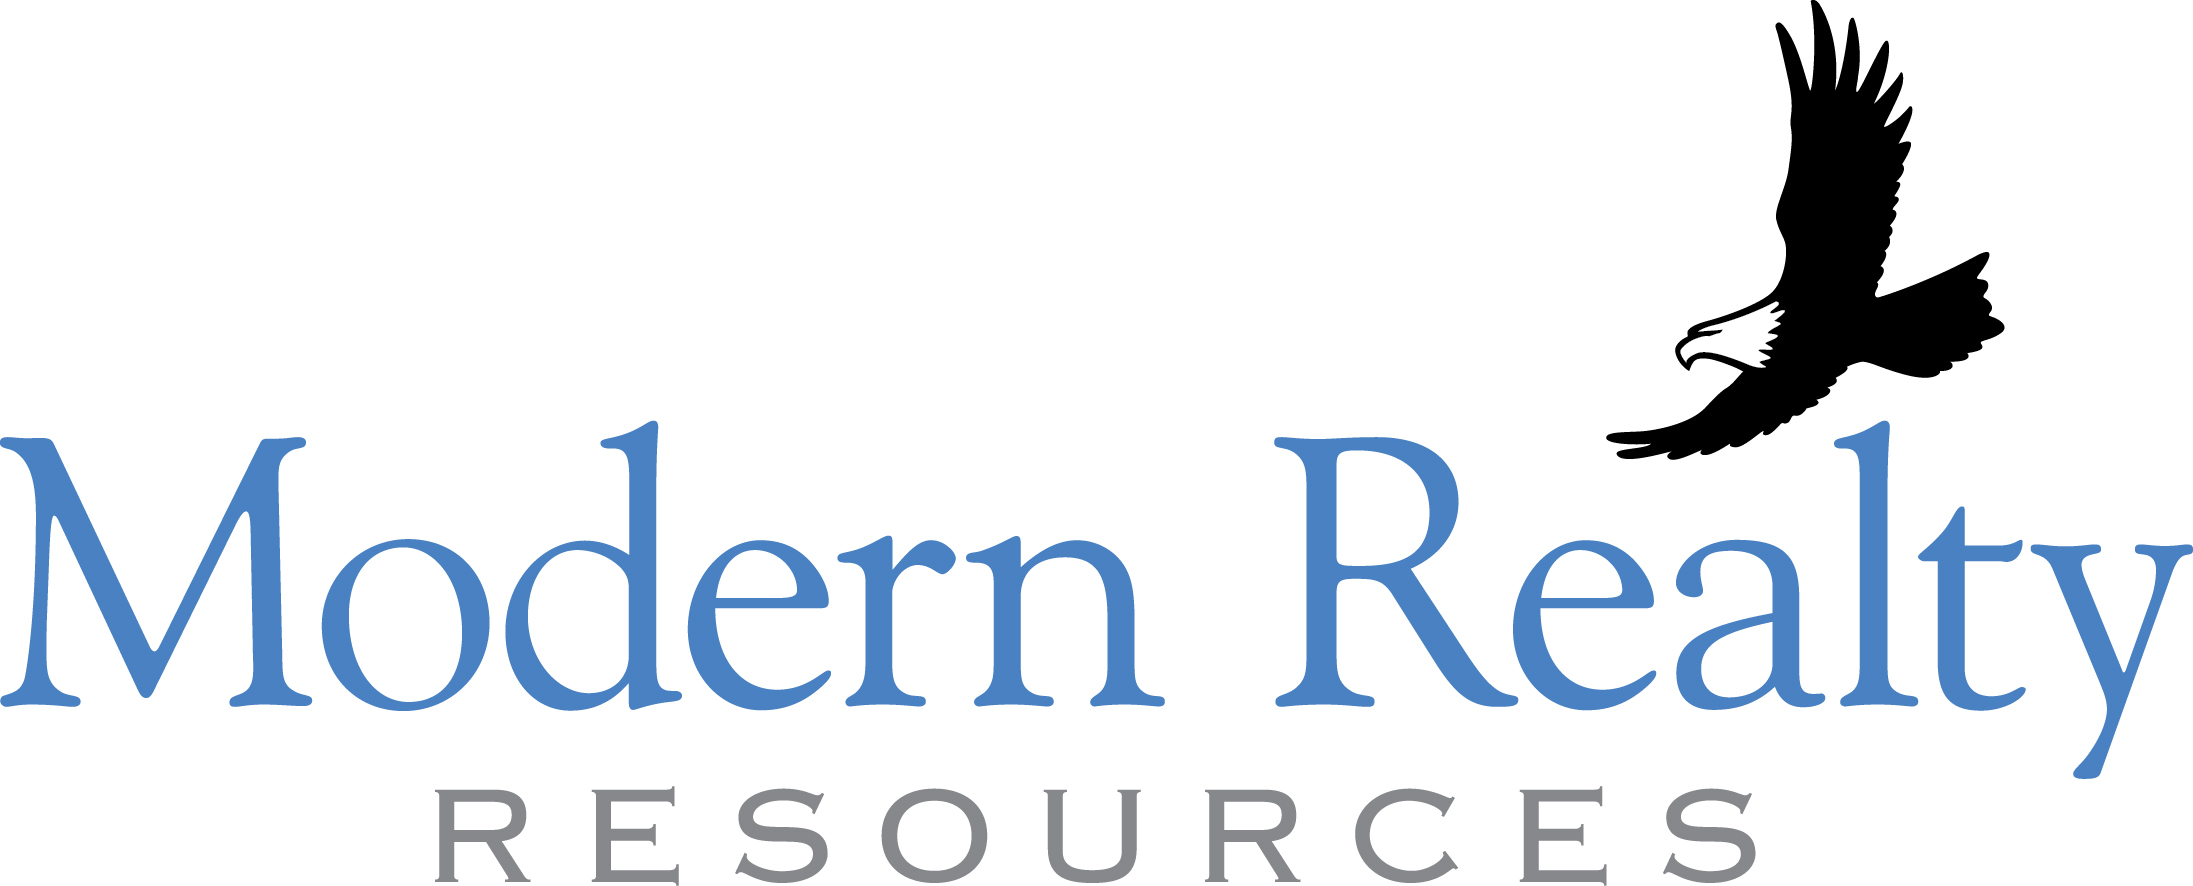 Modern Realty Resources llc | AuctionNinja